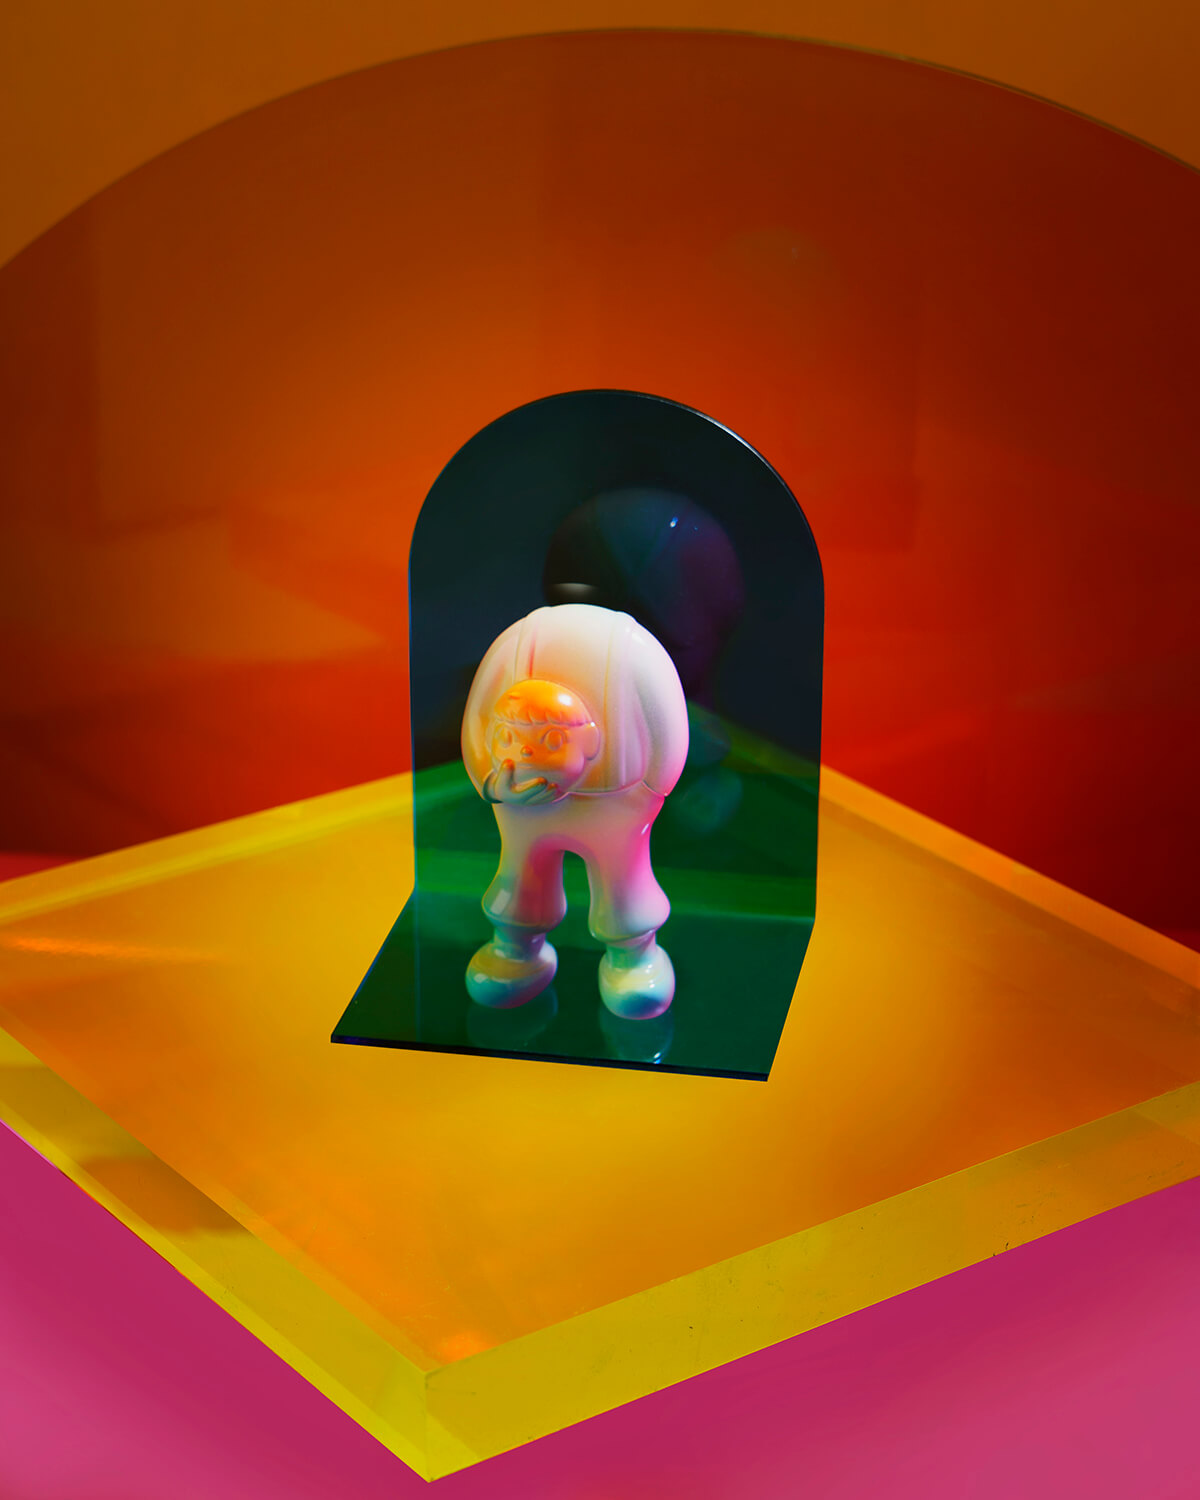 Kongkee 'Flower In The Mirror' Limited Edition LeeeeeeToy Figure, Glow in Dark, large